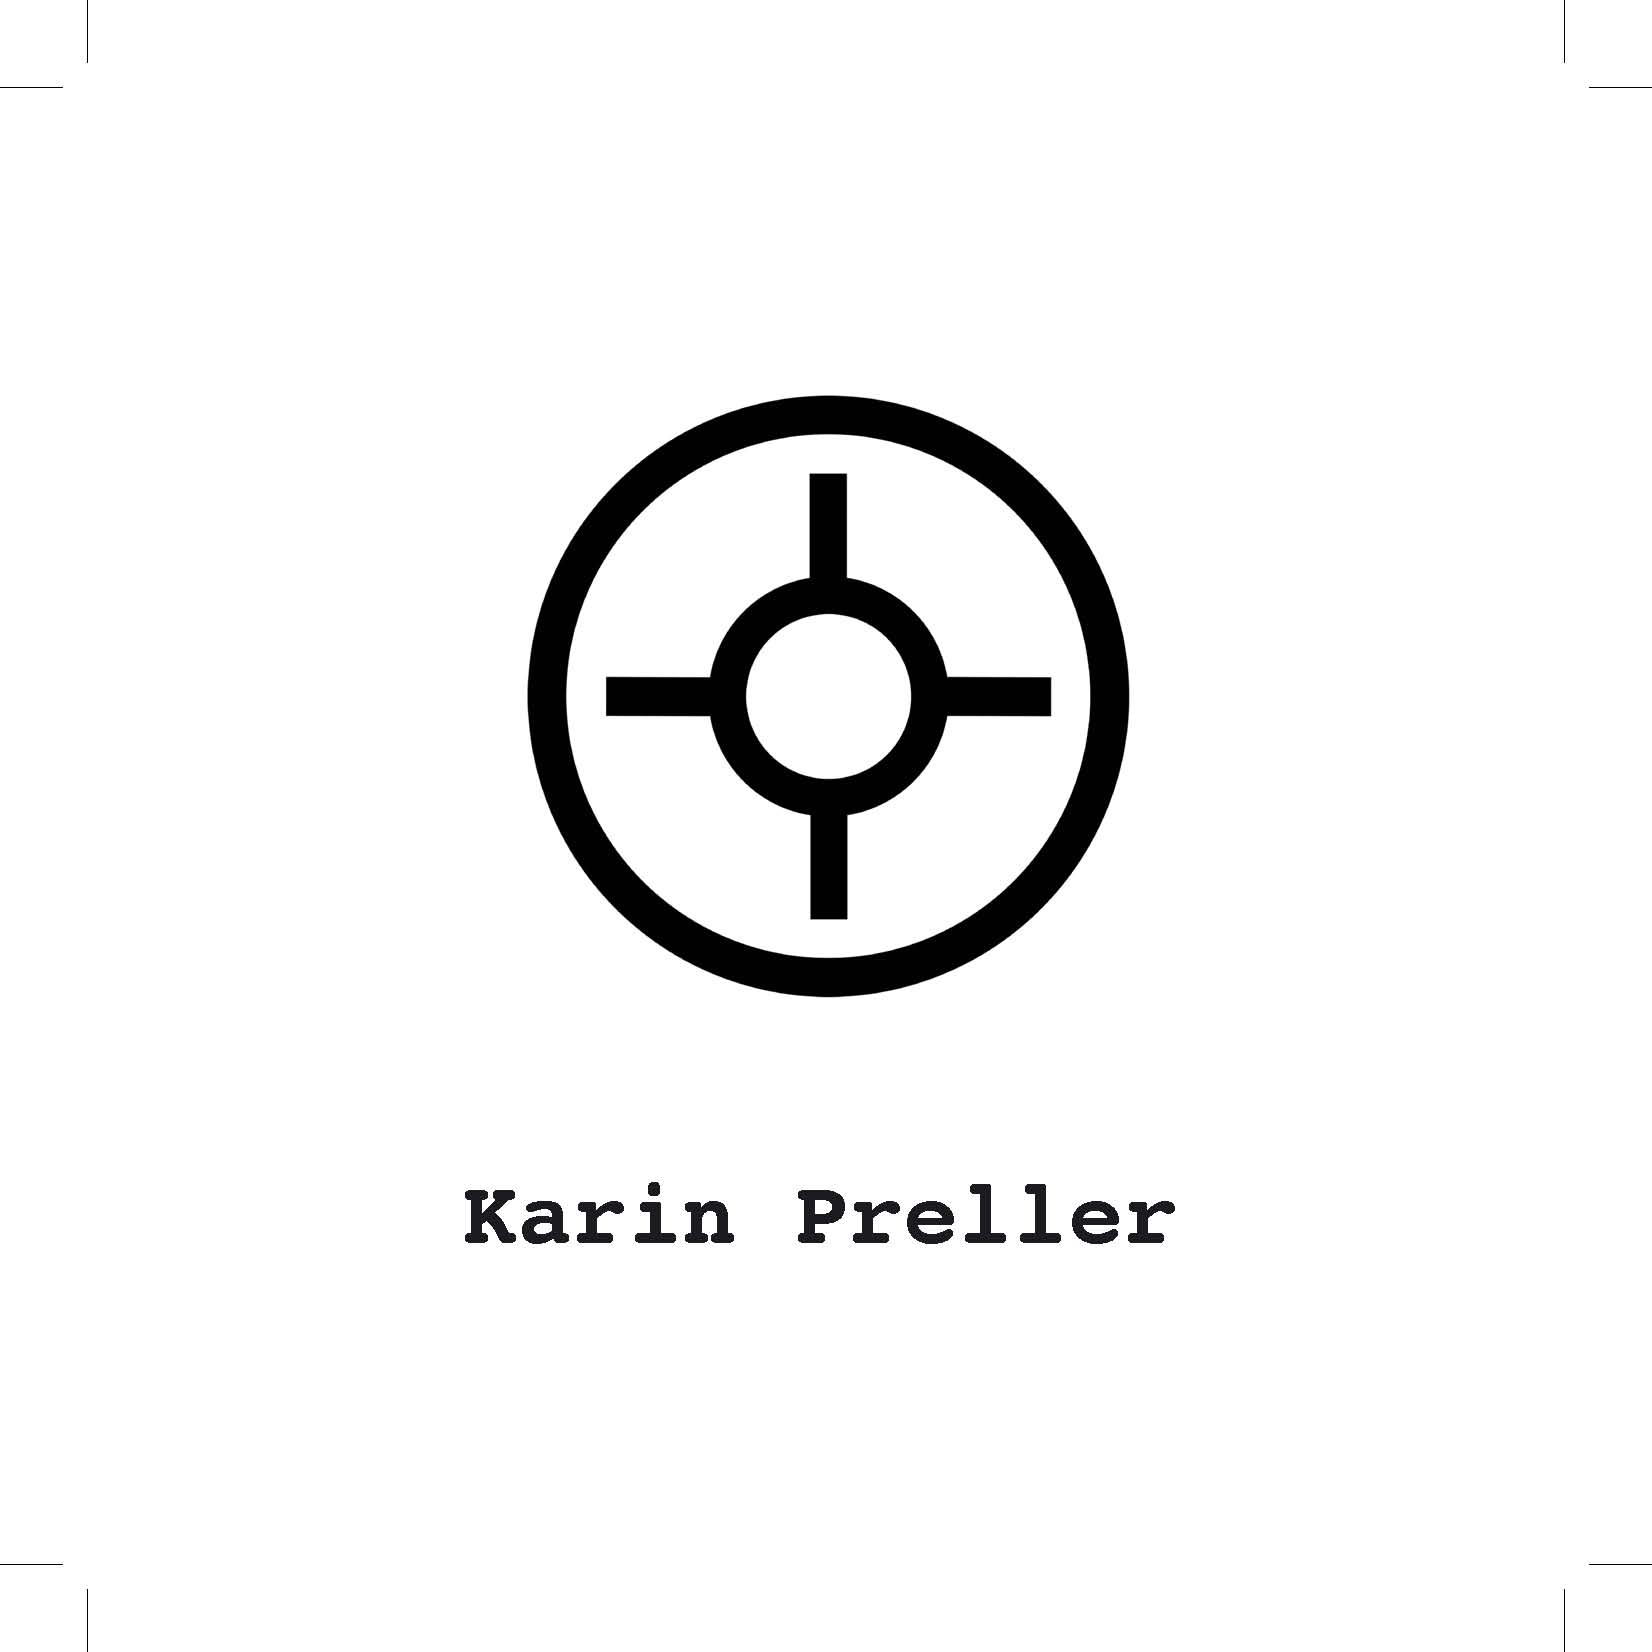 MAP Southafrica - Karin Preller 2006 0